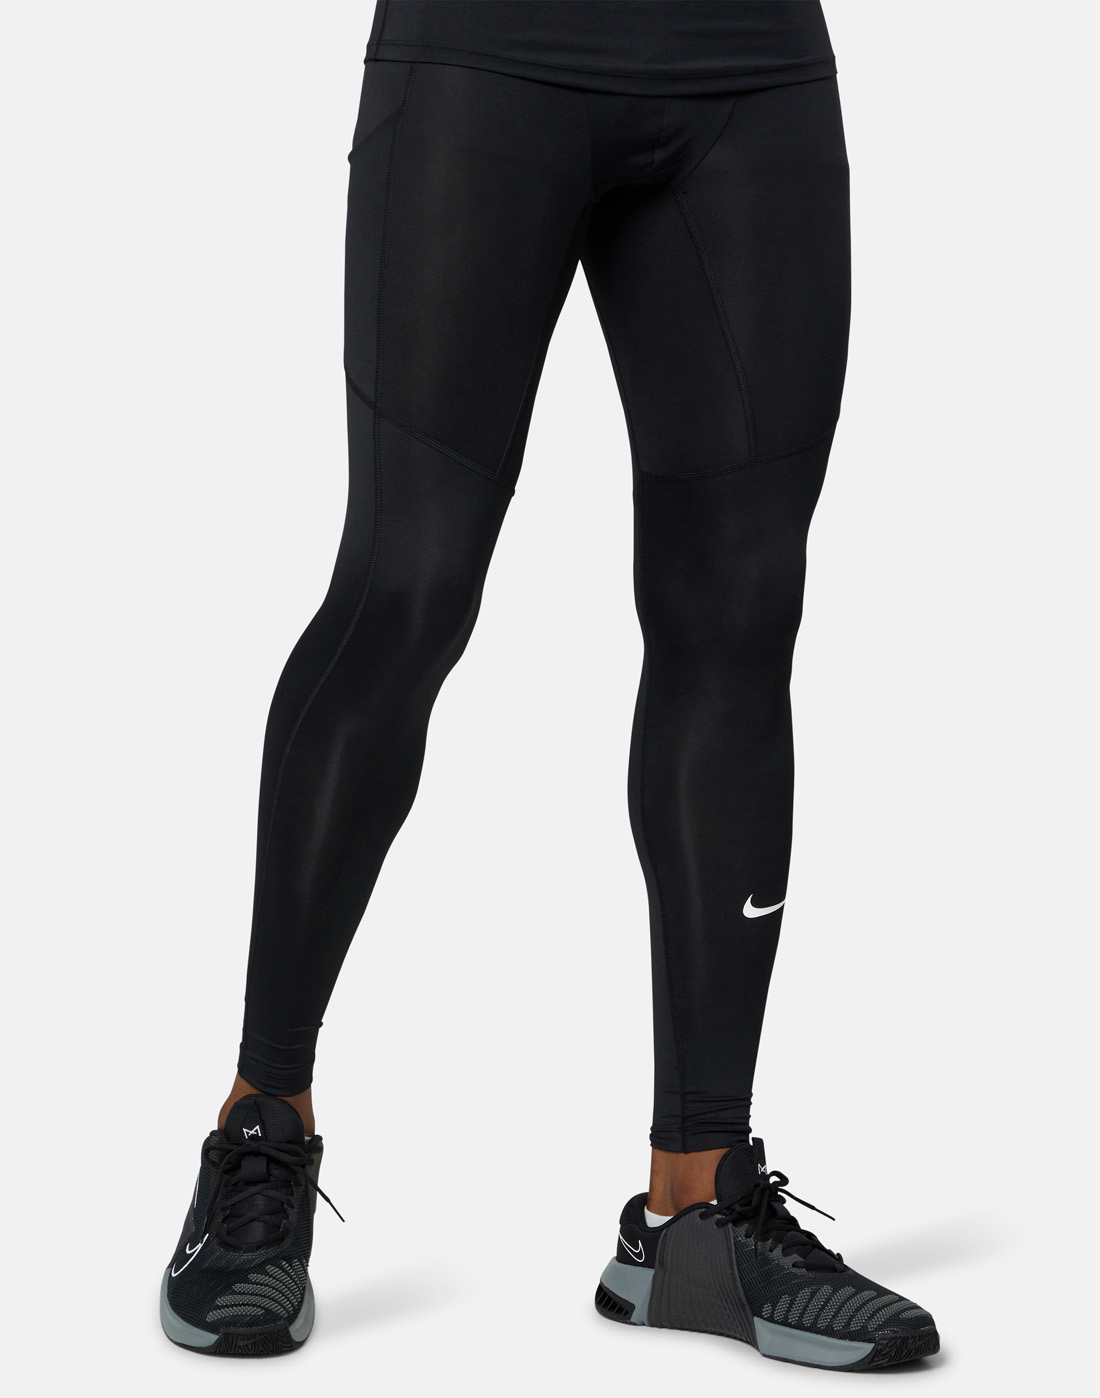 Nike Mens Pro Base Training Tights - Black | Life Style Sports IE